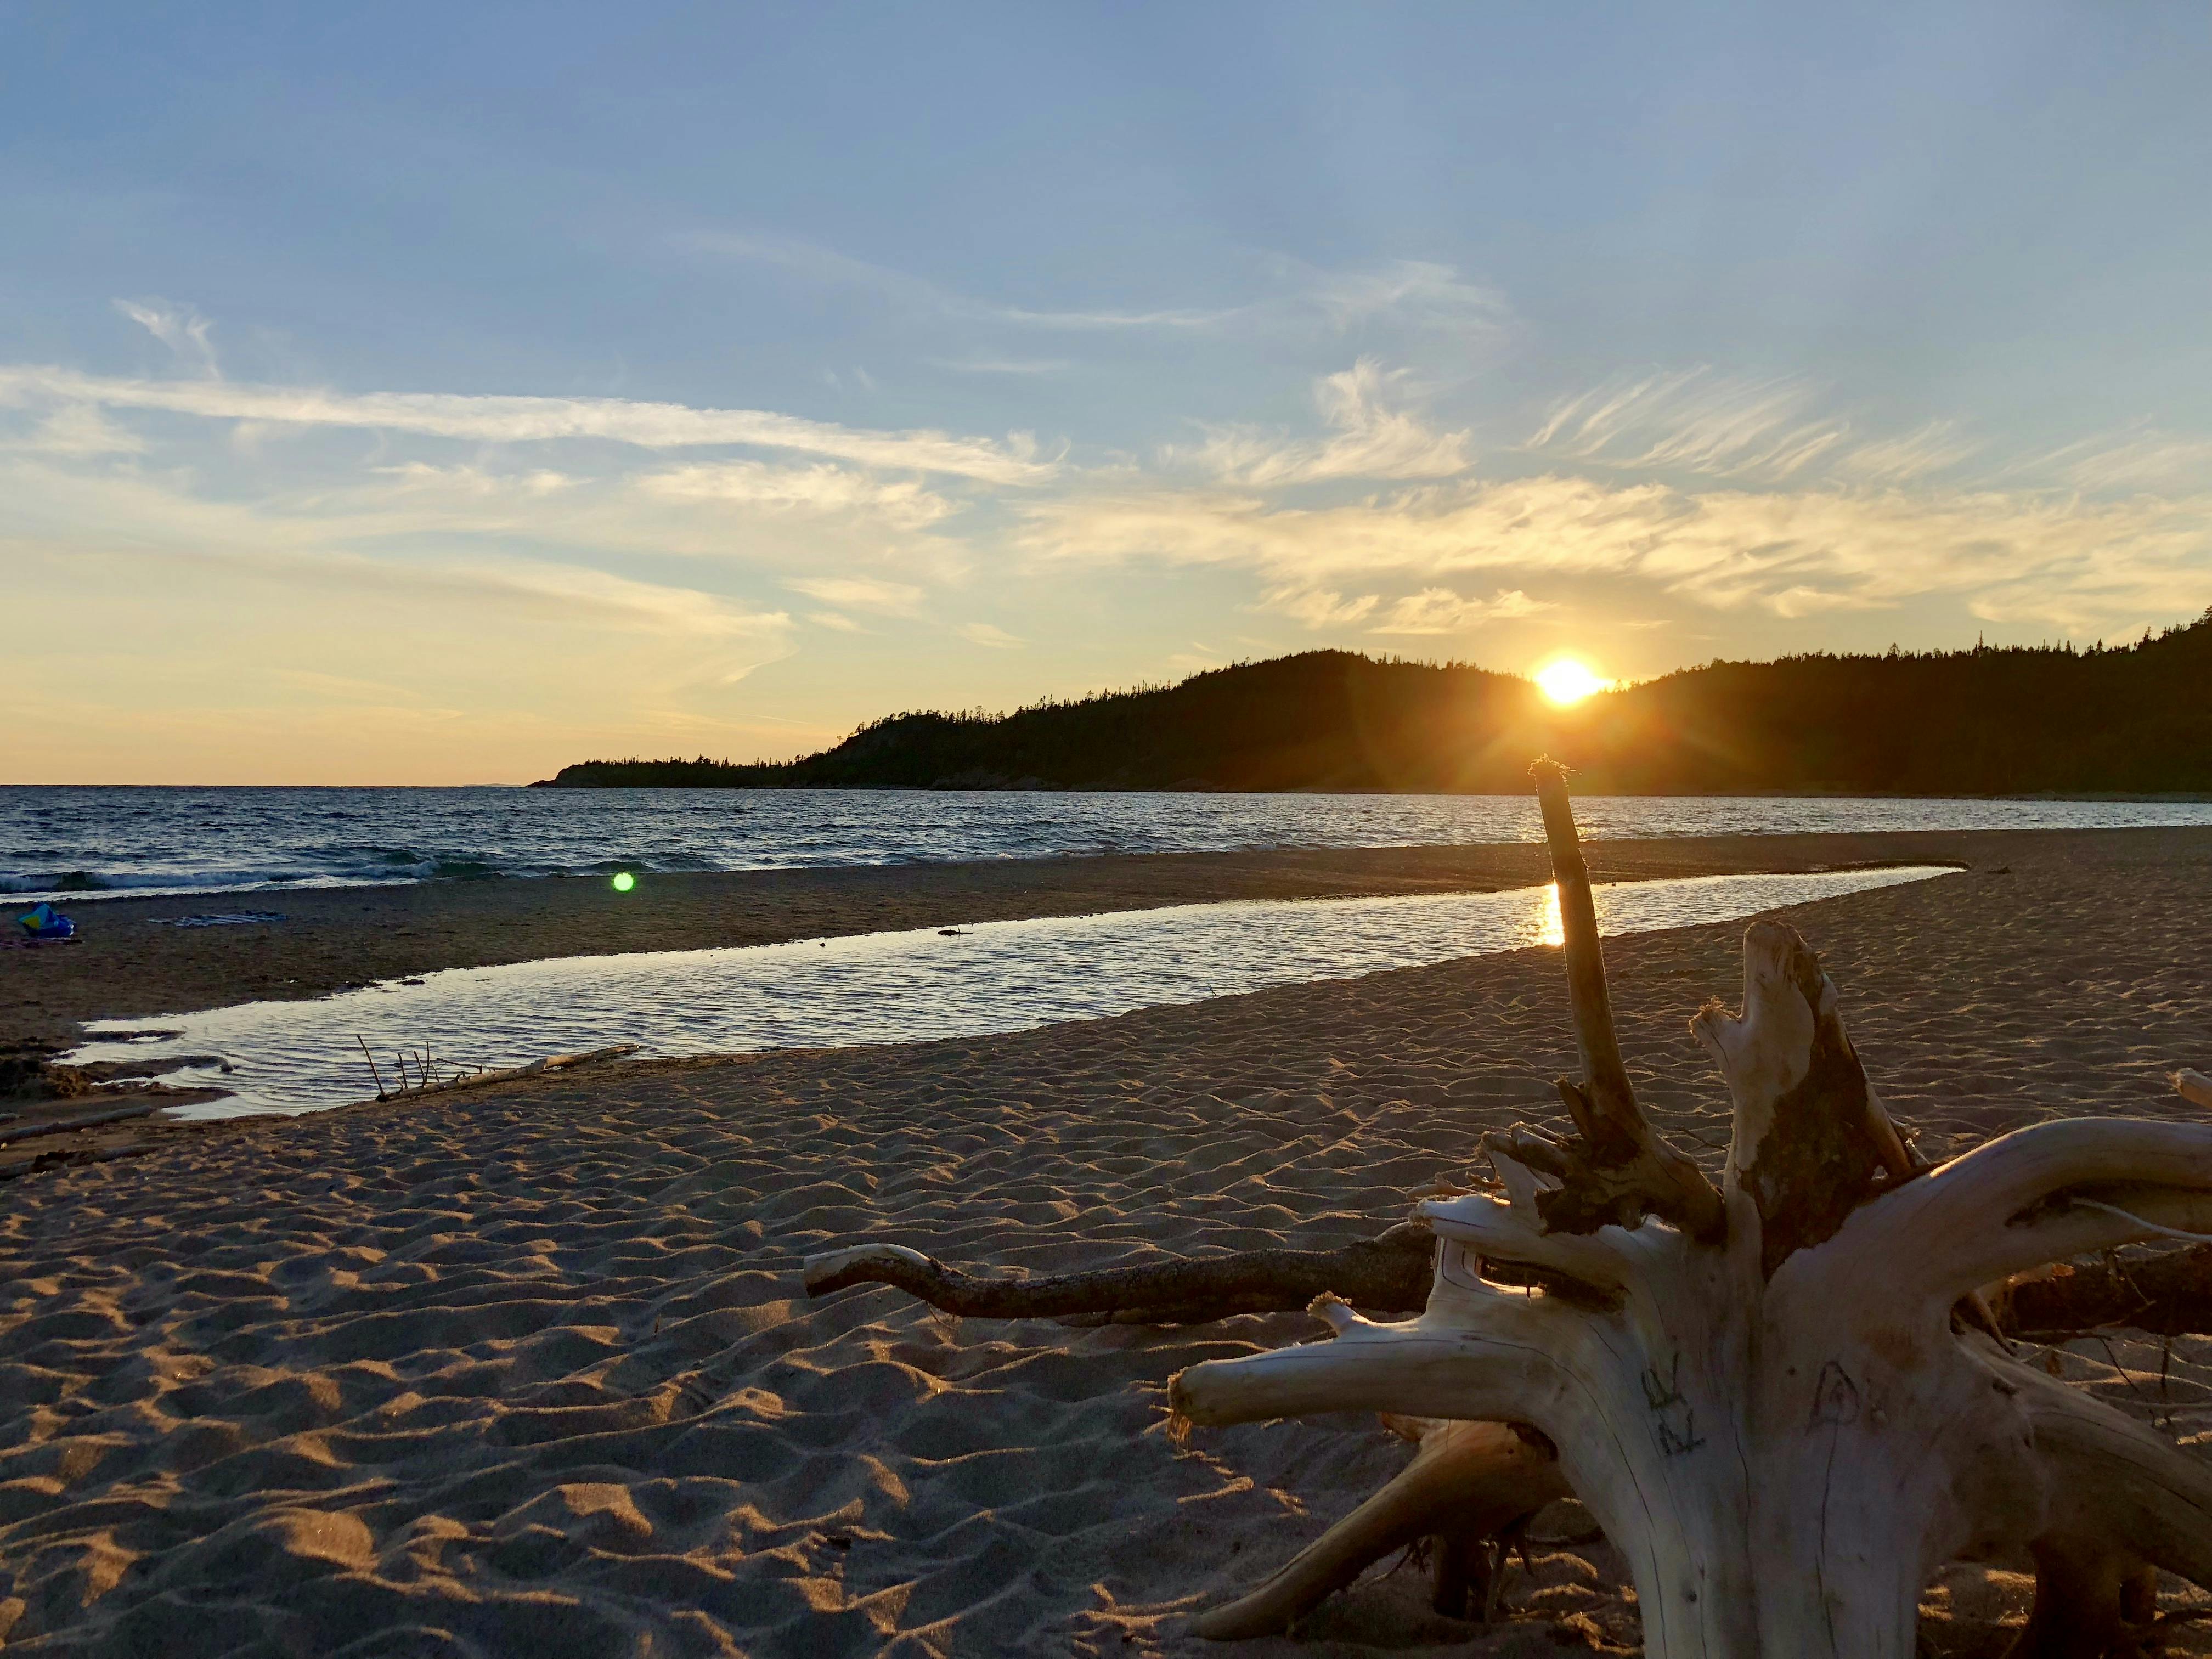 Driftwood on beach at sunset